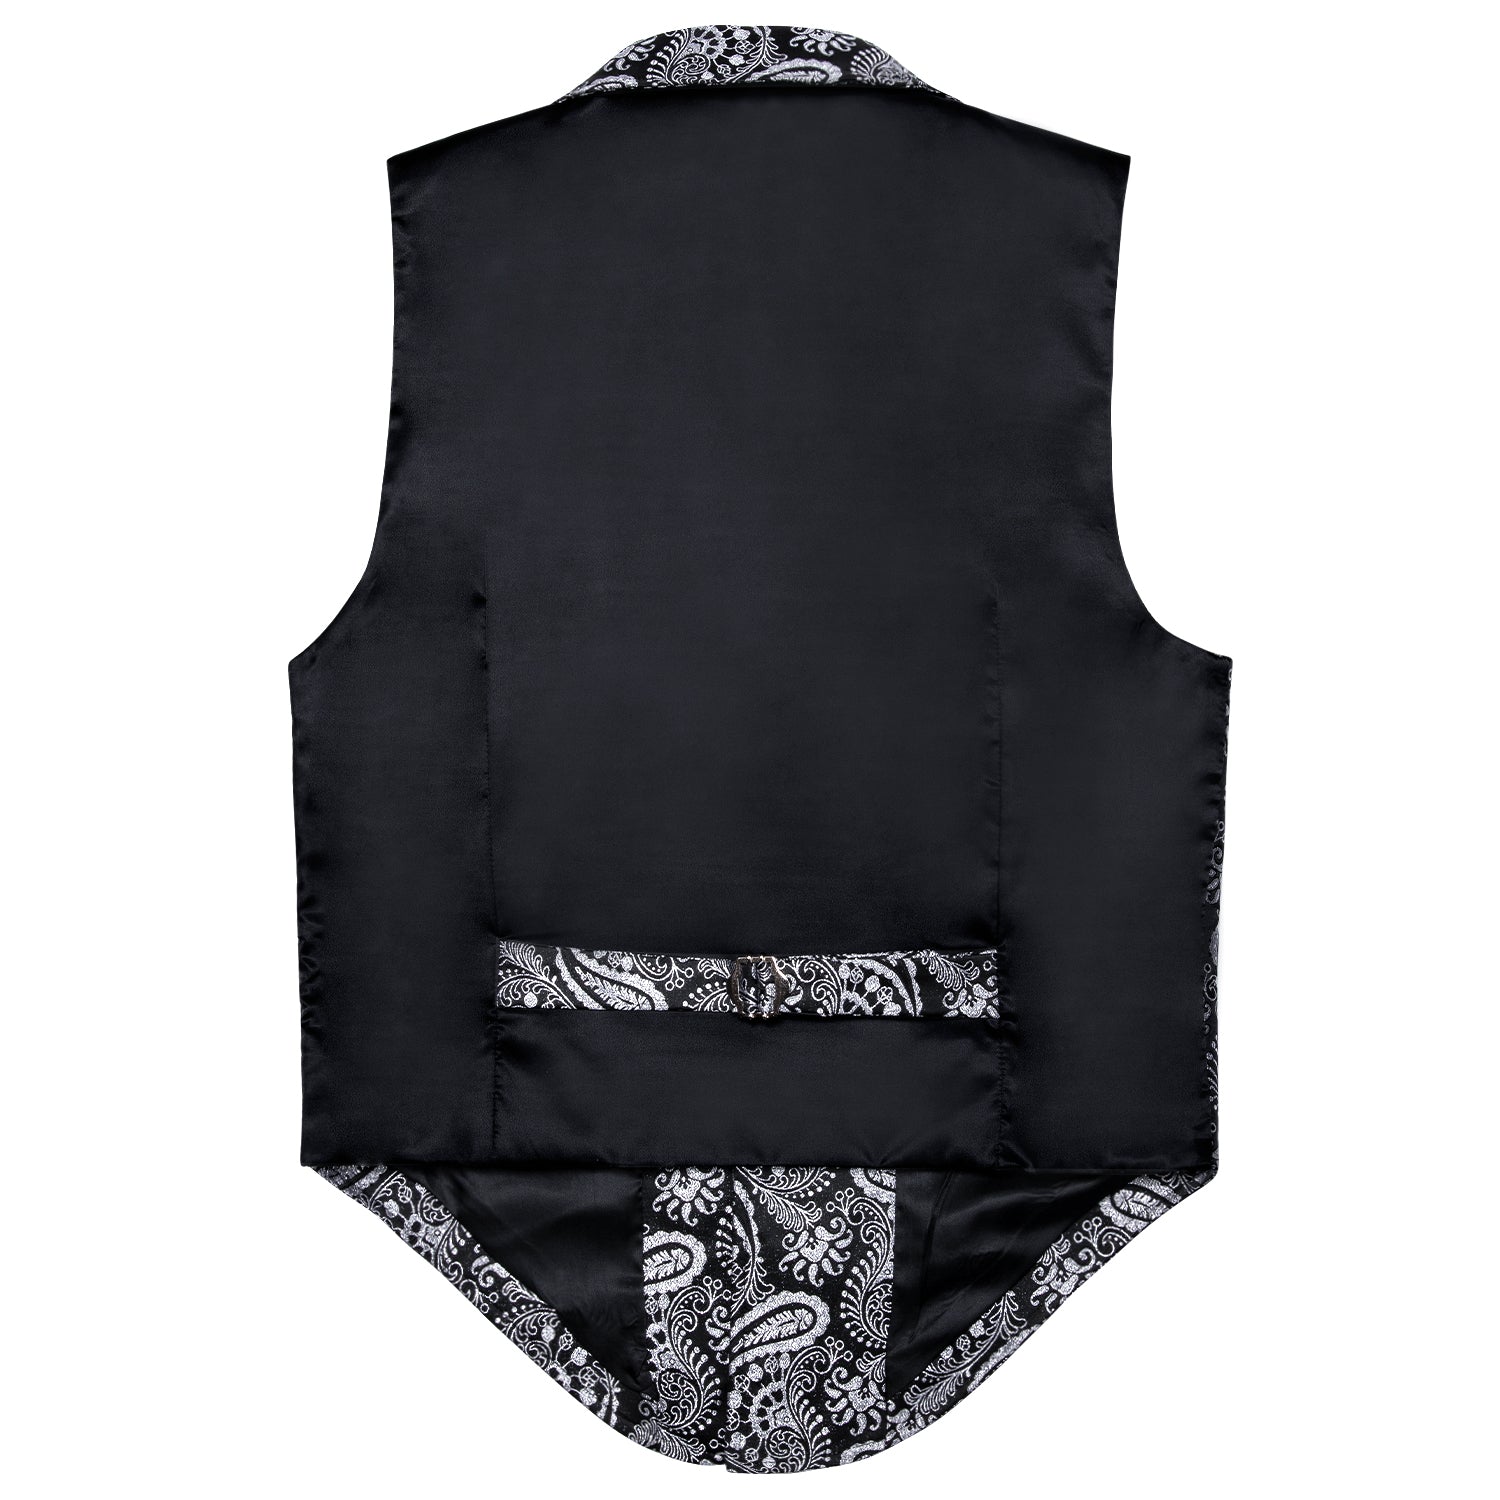 Luxury Men's Novelty Grey Black Paisley Silk Vest